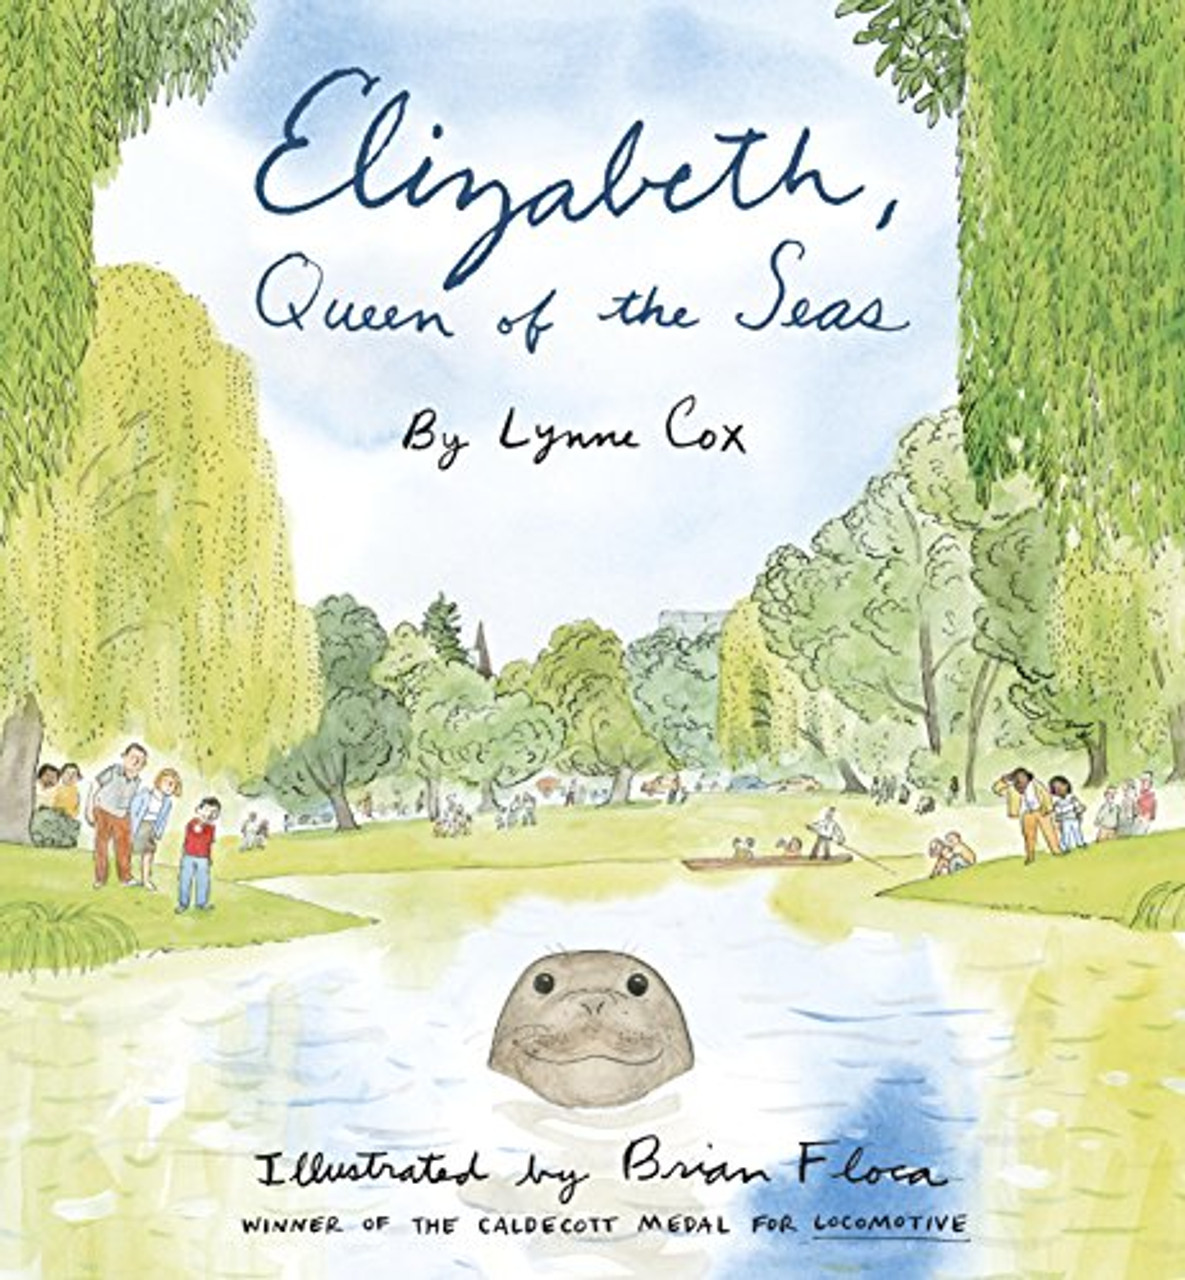 Elizabeth, Queen of the Seas by Lynne Cox